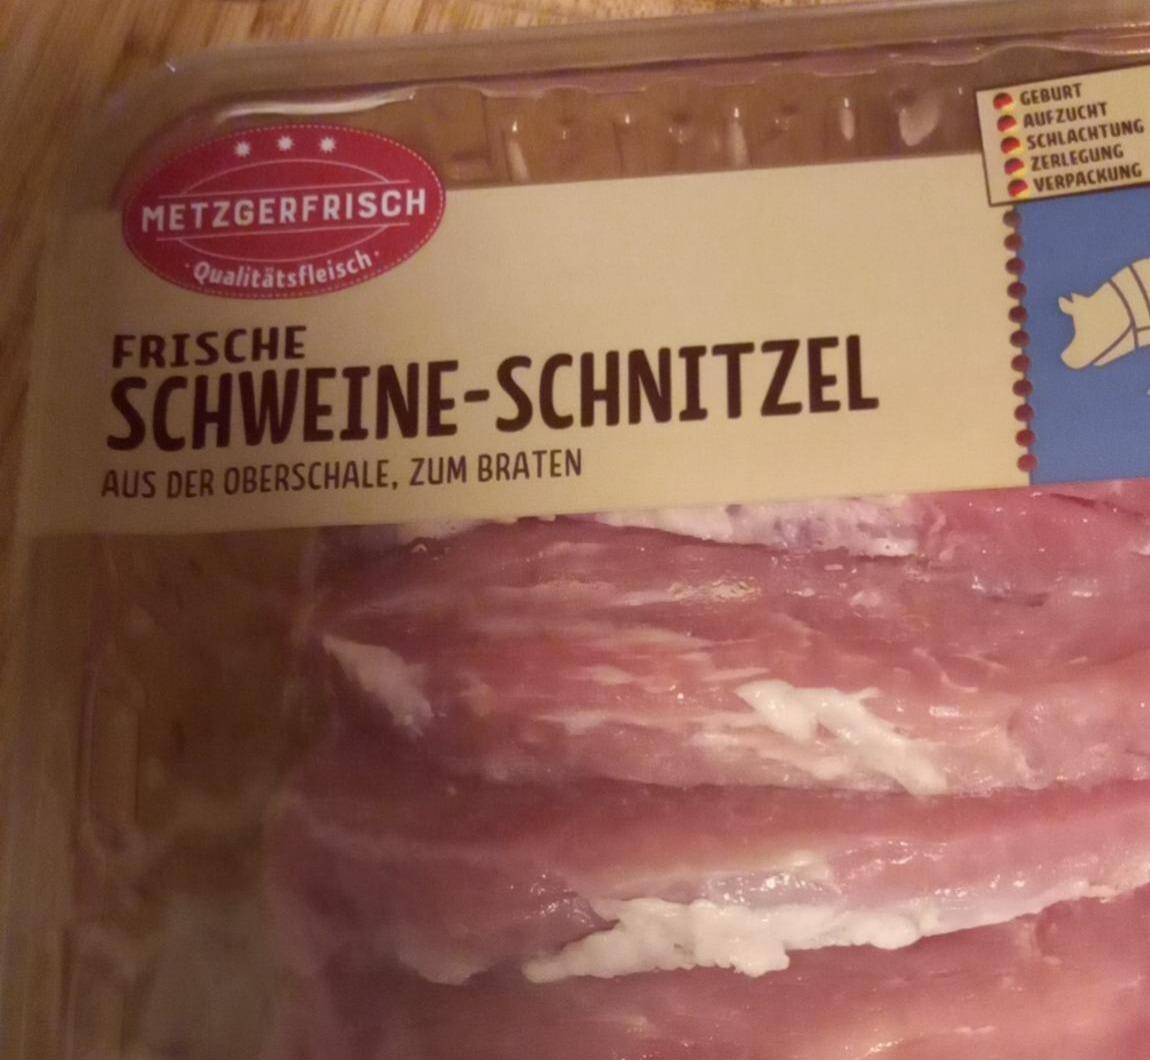 kalorie, Schweine-Schnitzel nutriční - a Frische hodnoty kJ Metzgerfrisch